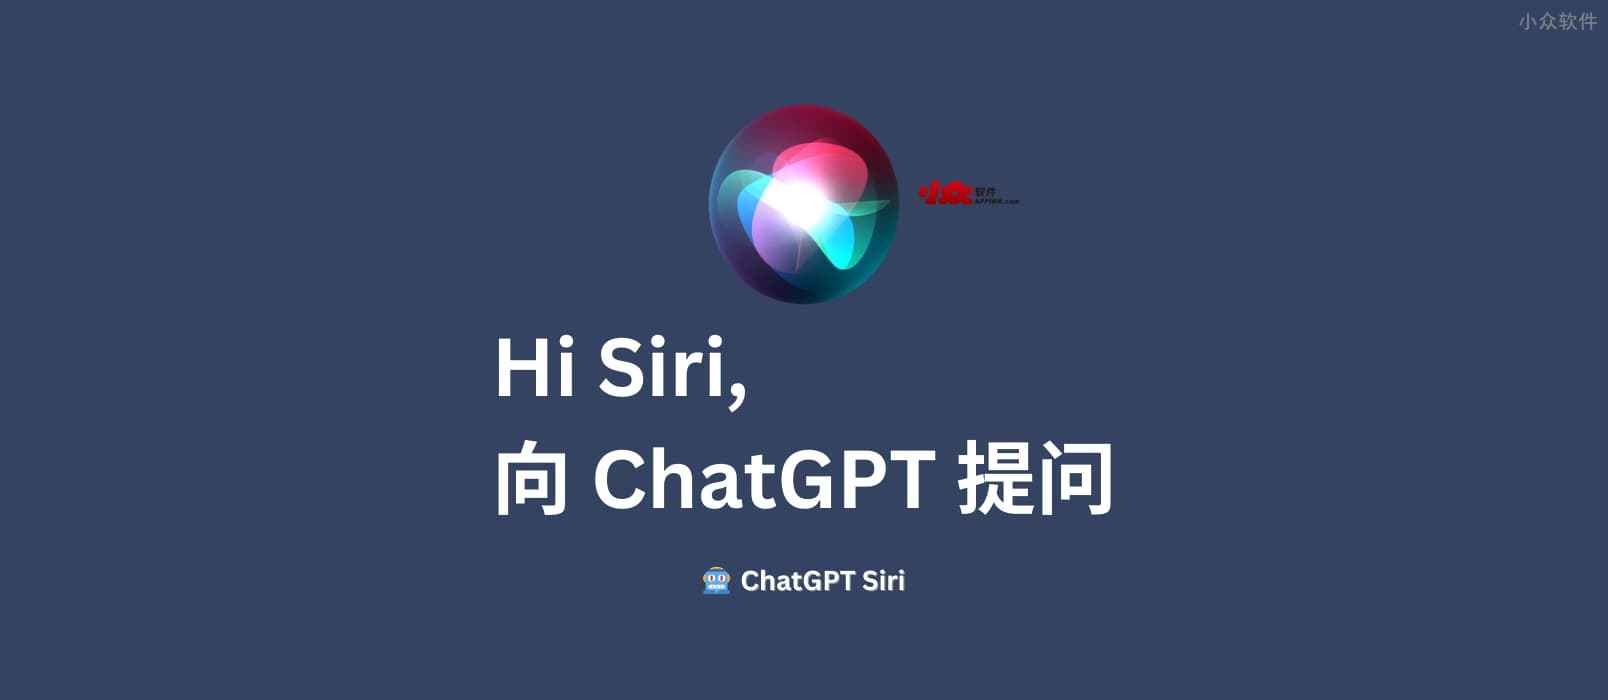 ️ ChatGPT Siri - 语音指令，用 Hi Siri 向 ChatGPT 提问[快捷指令] 1